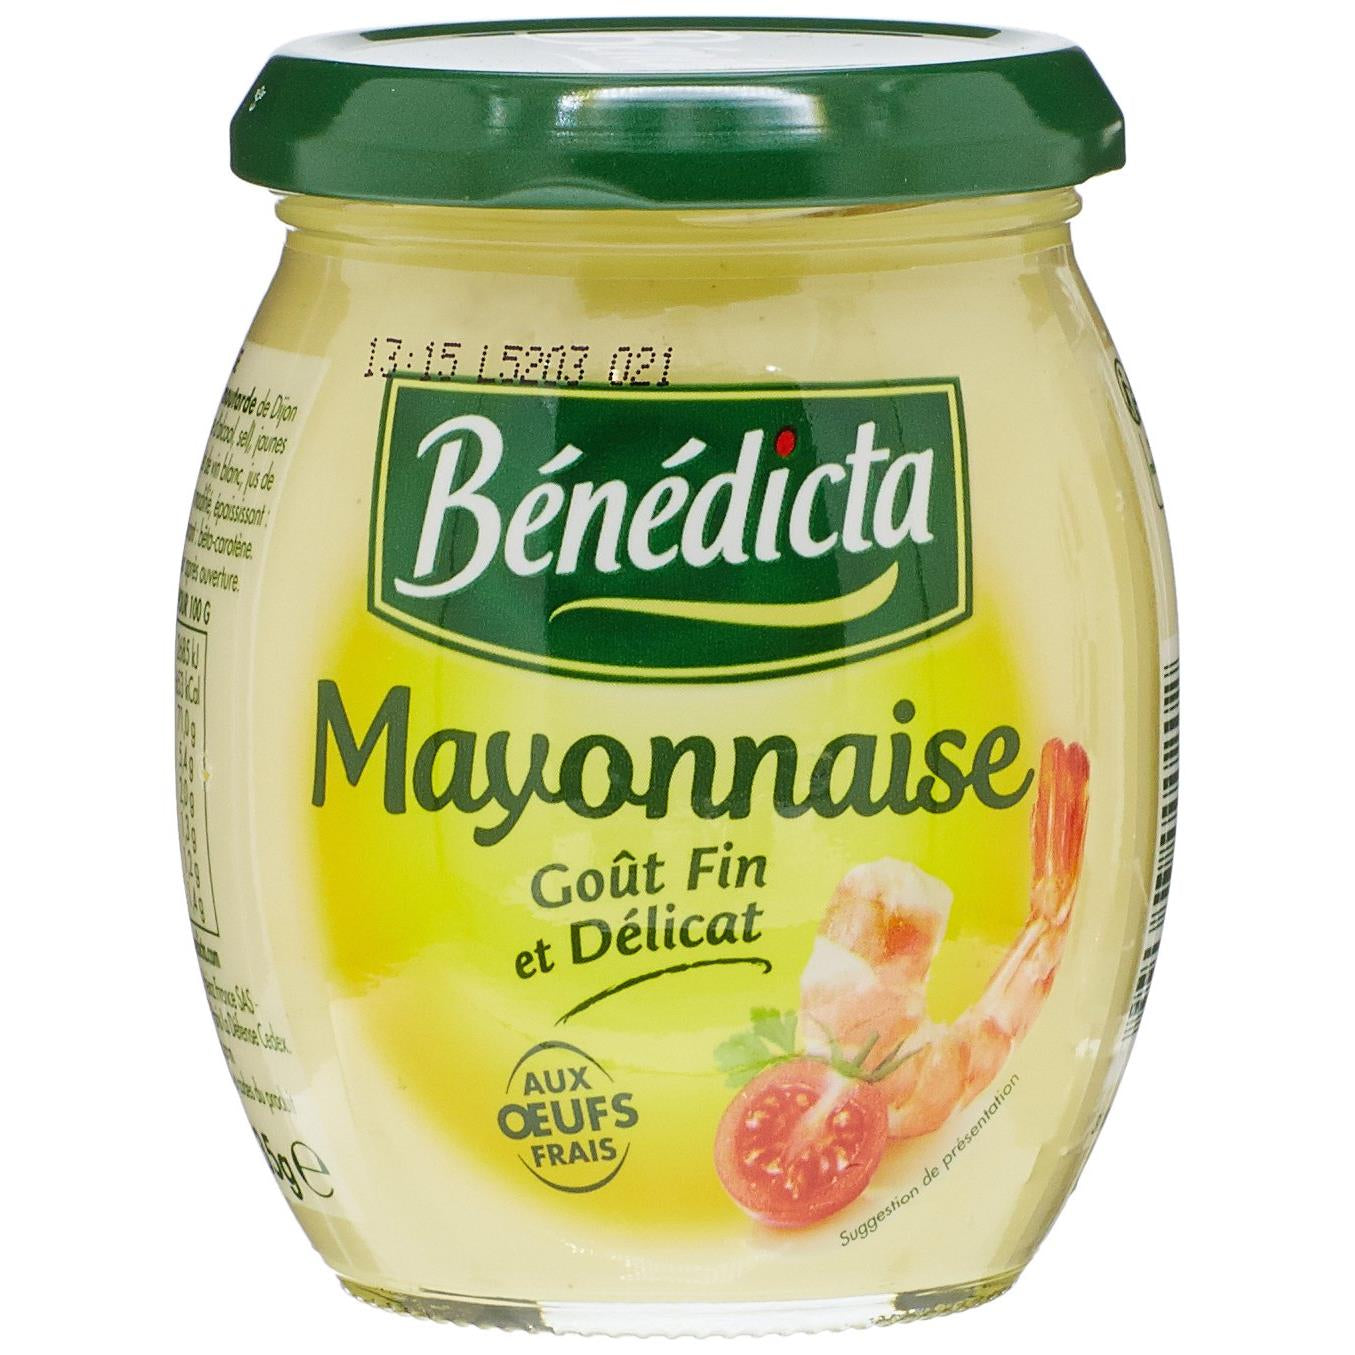 Benedicta Gourmet Mayonnaise, French Mayonnaise, 235g